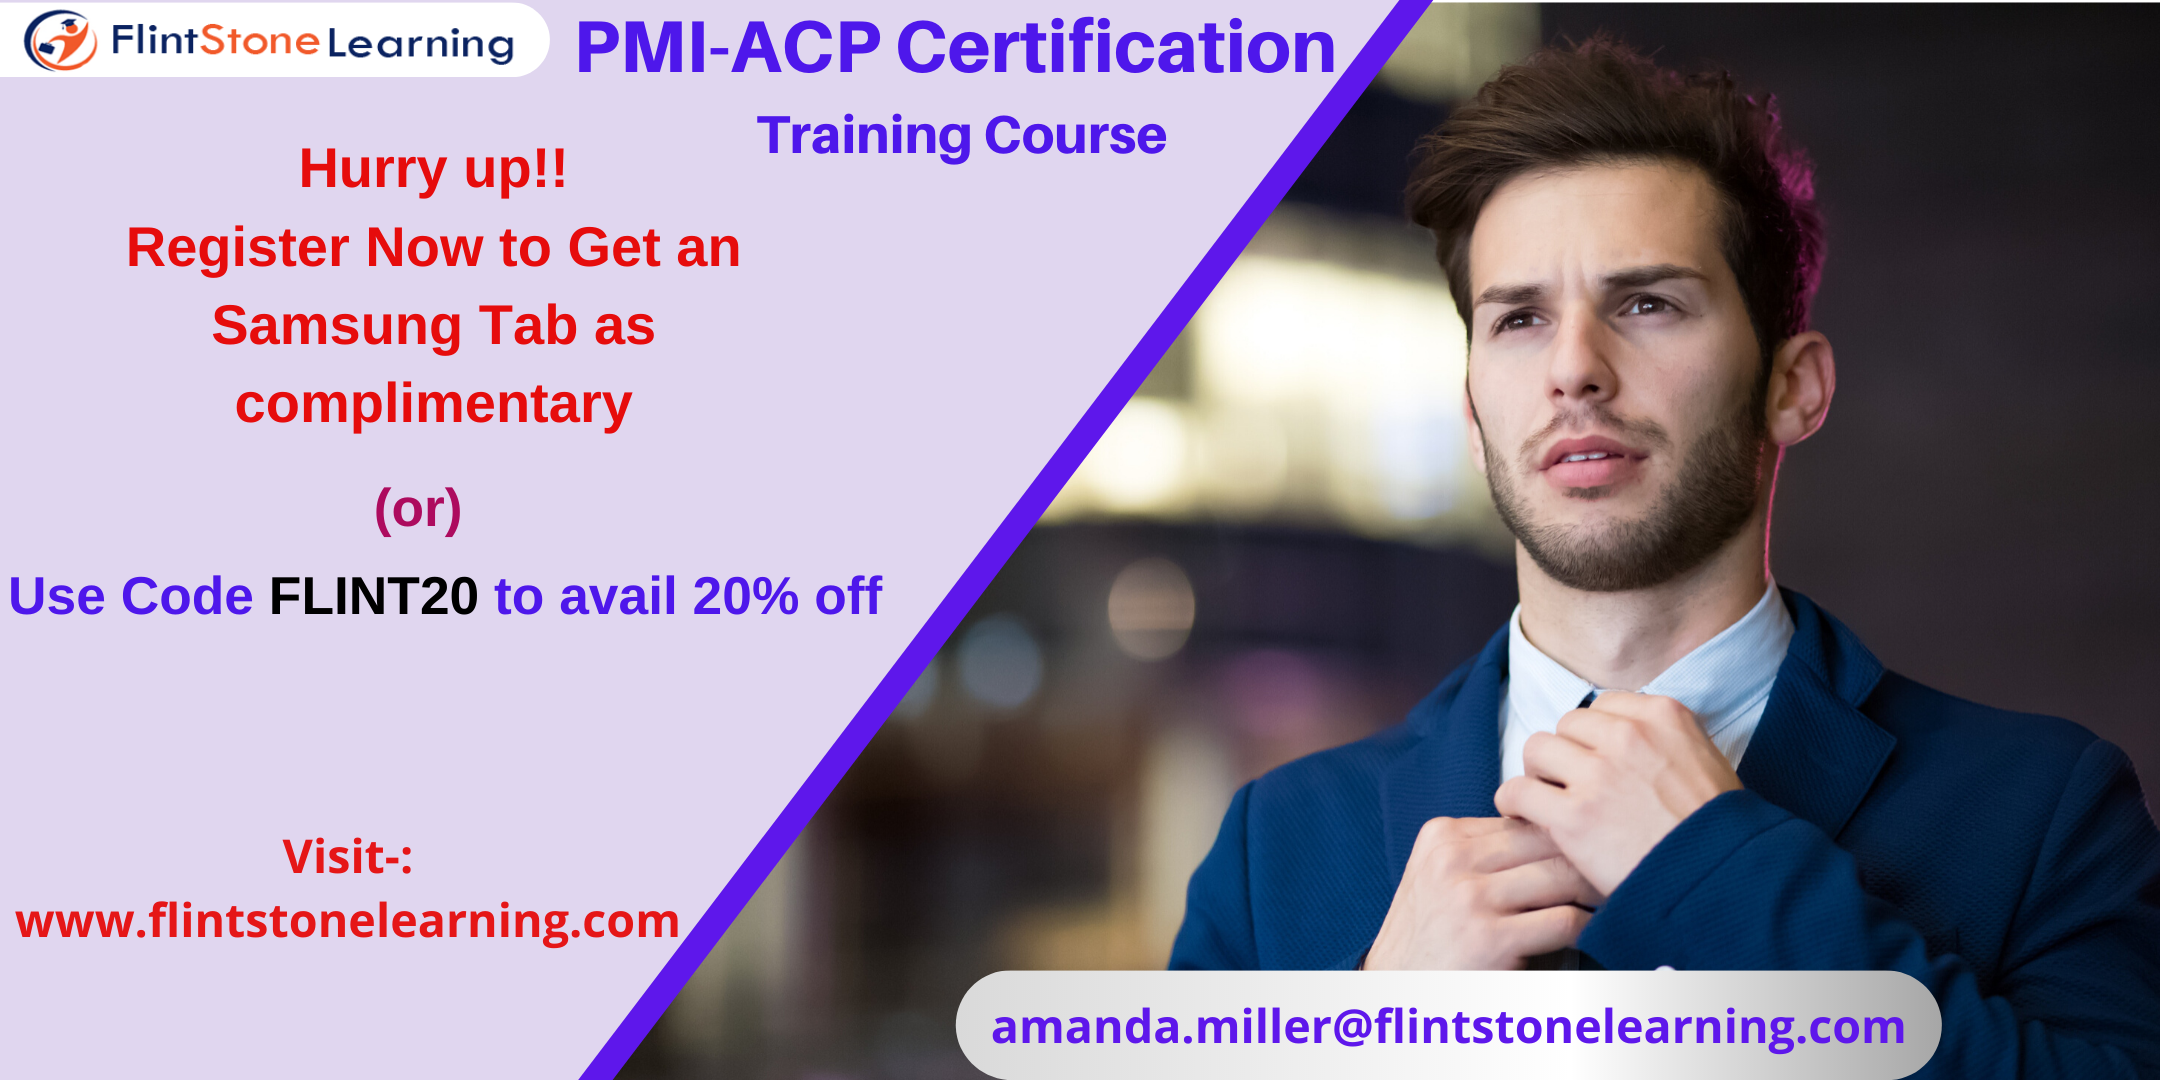 PMI-ACP Certification Training Course in Culver City, CA